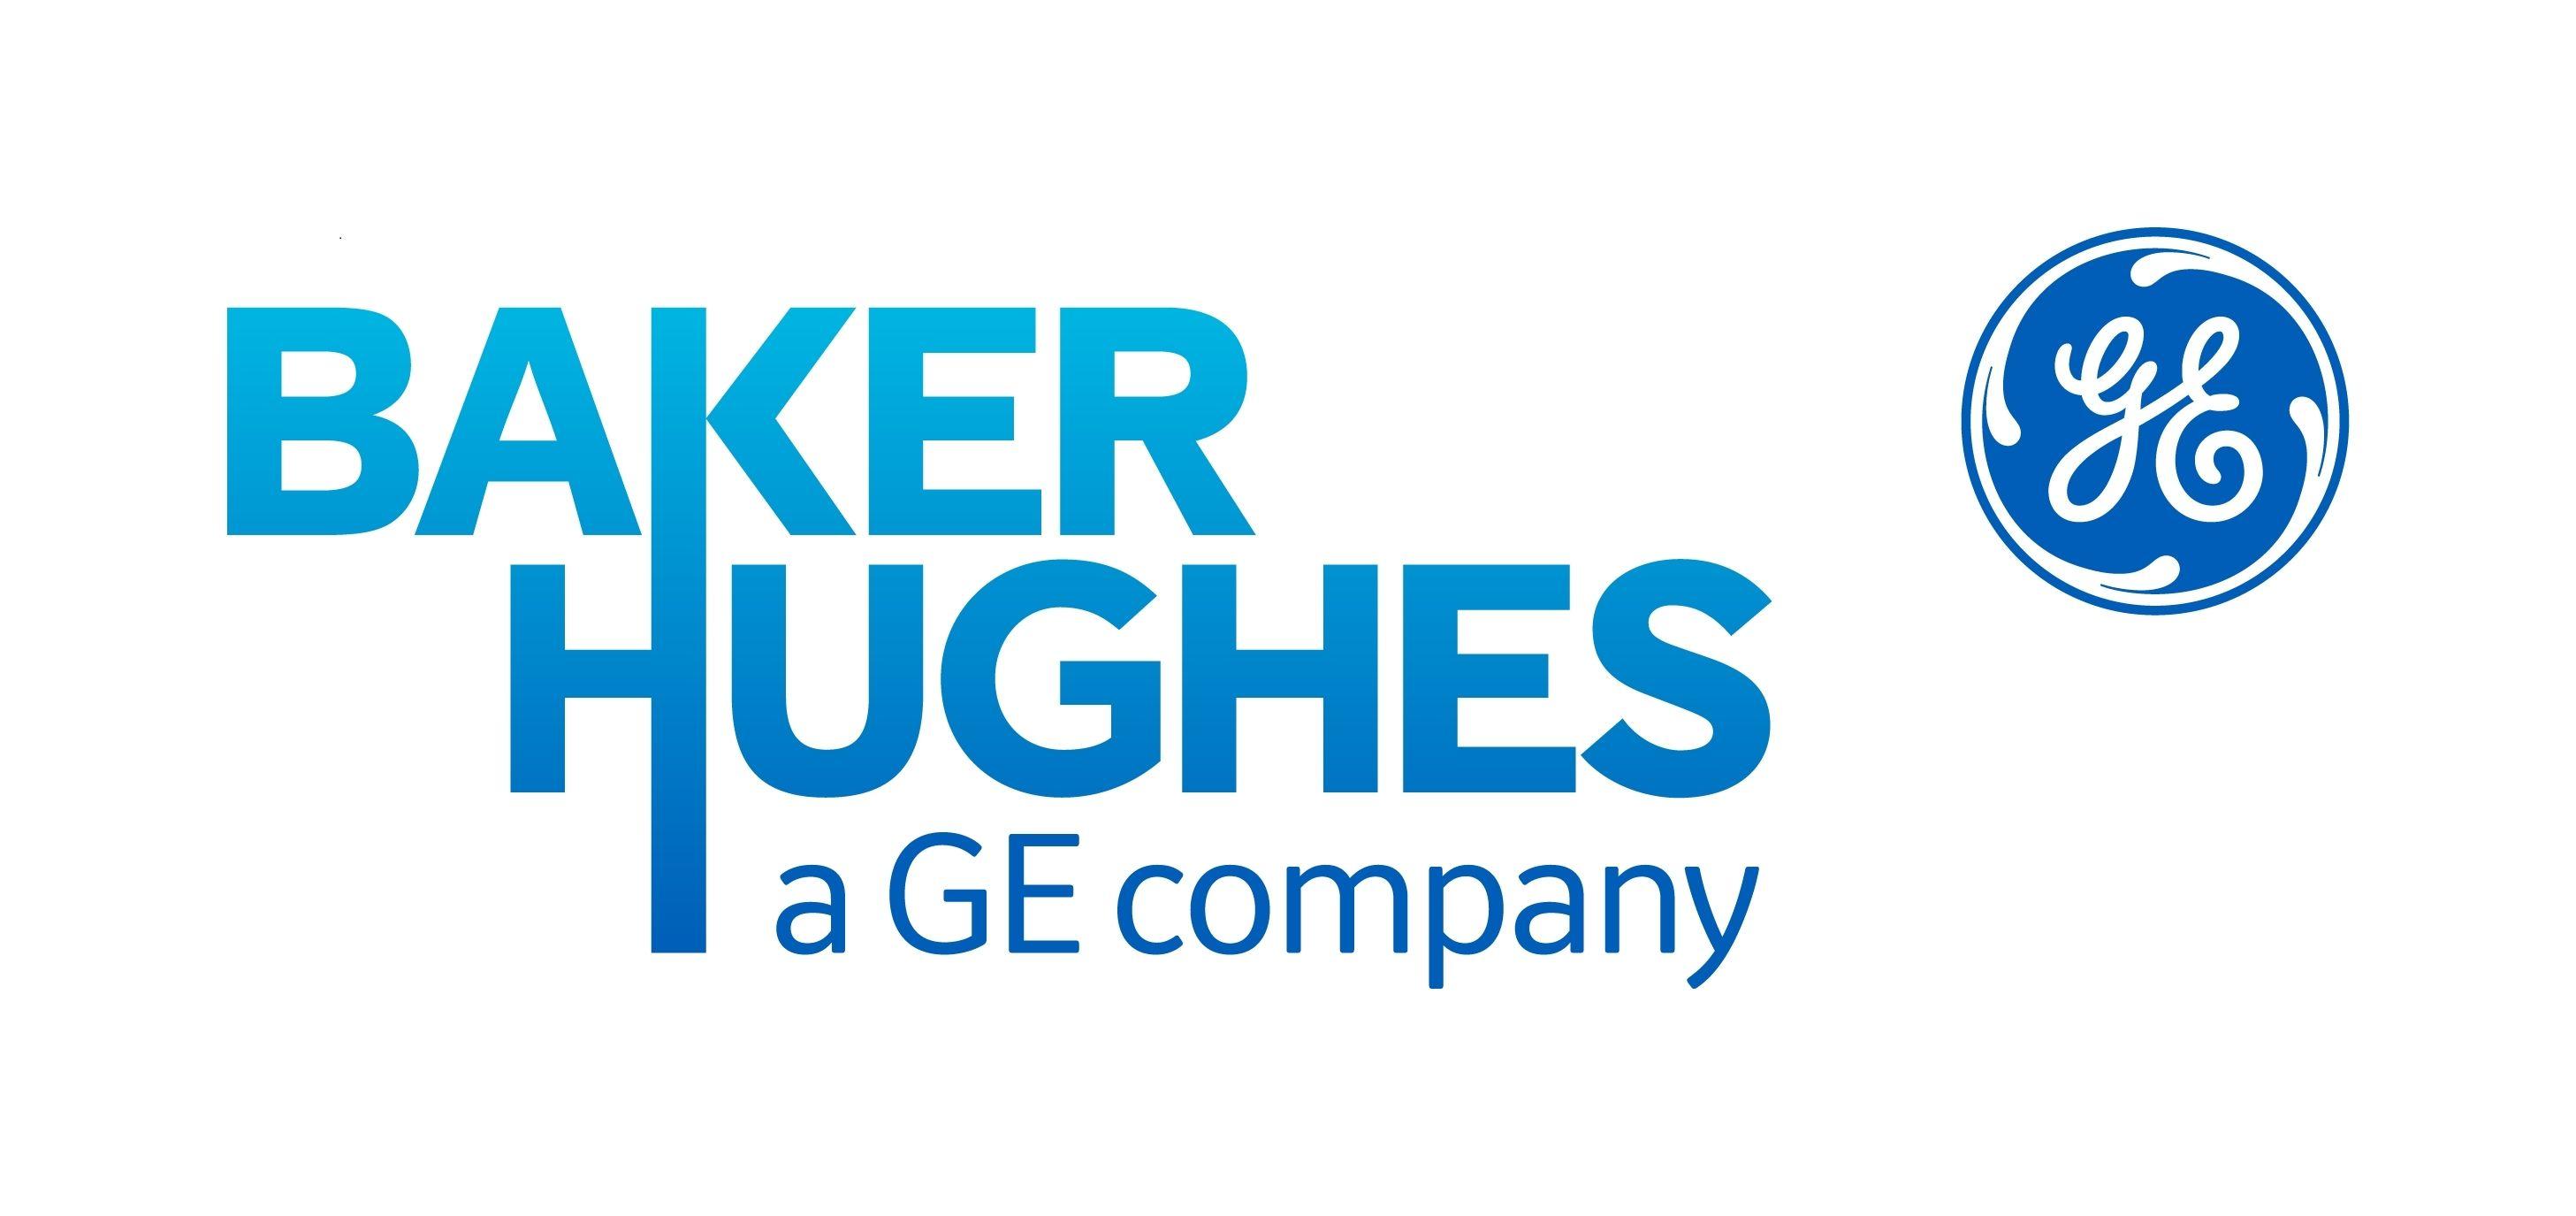 General Electric Company Logo - Baker Hughes, a GE company and General Electric Company Announce a ...